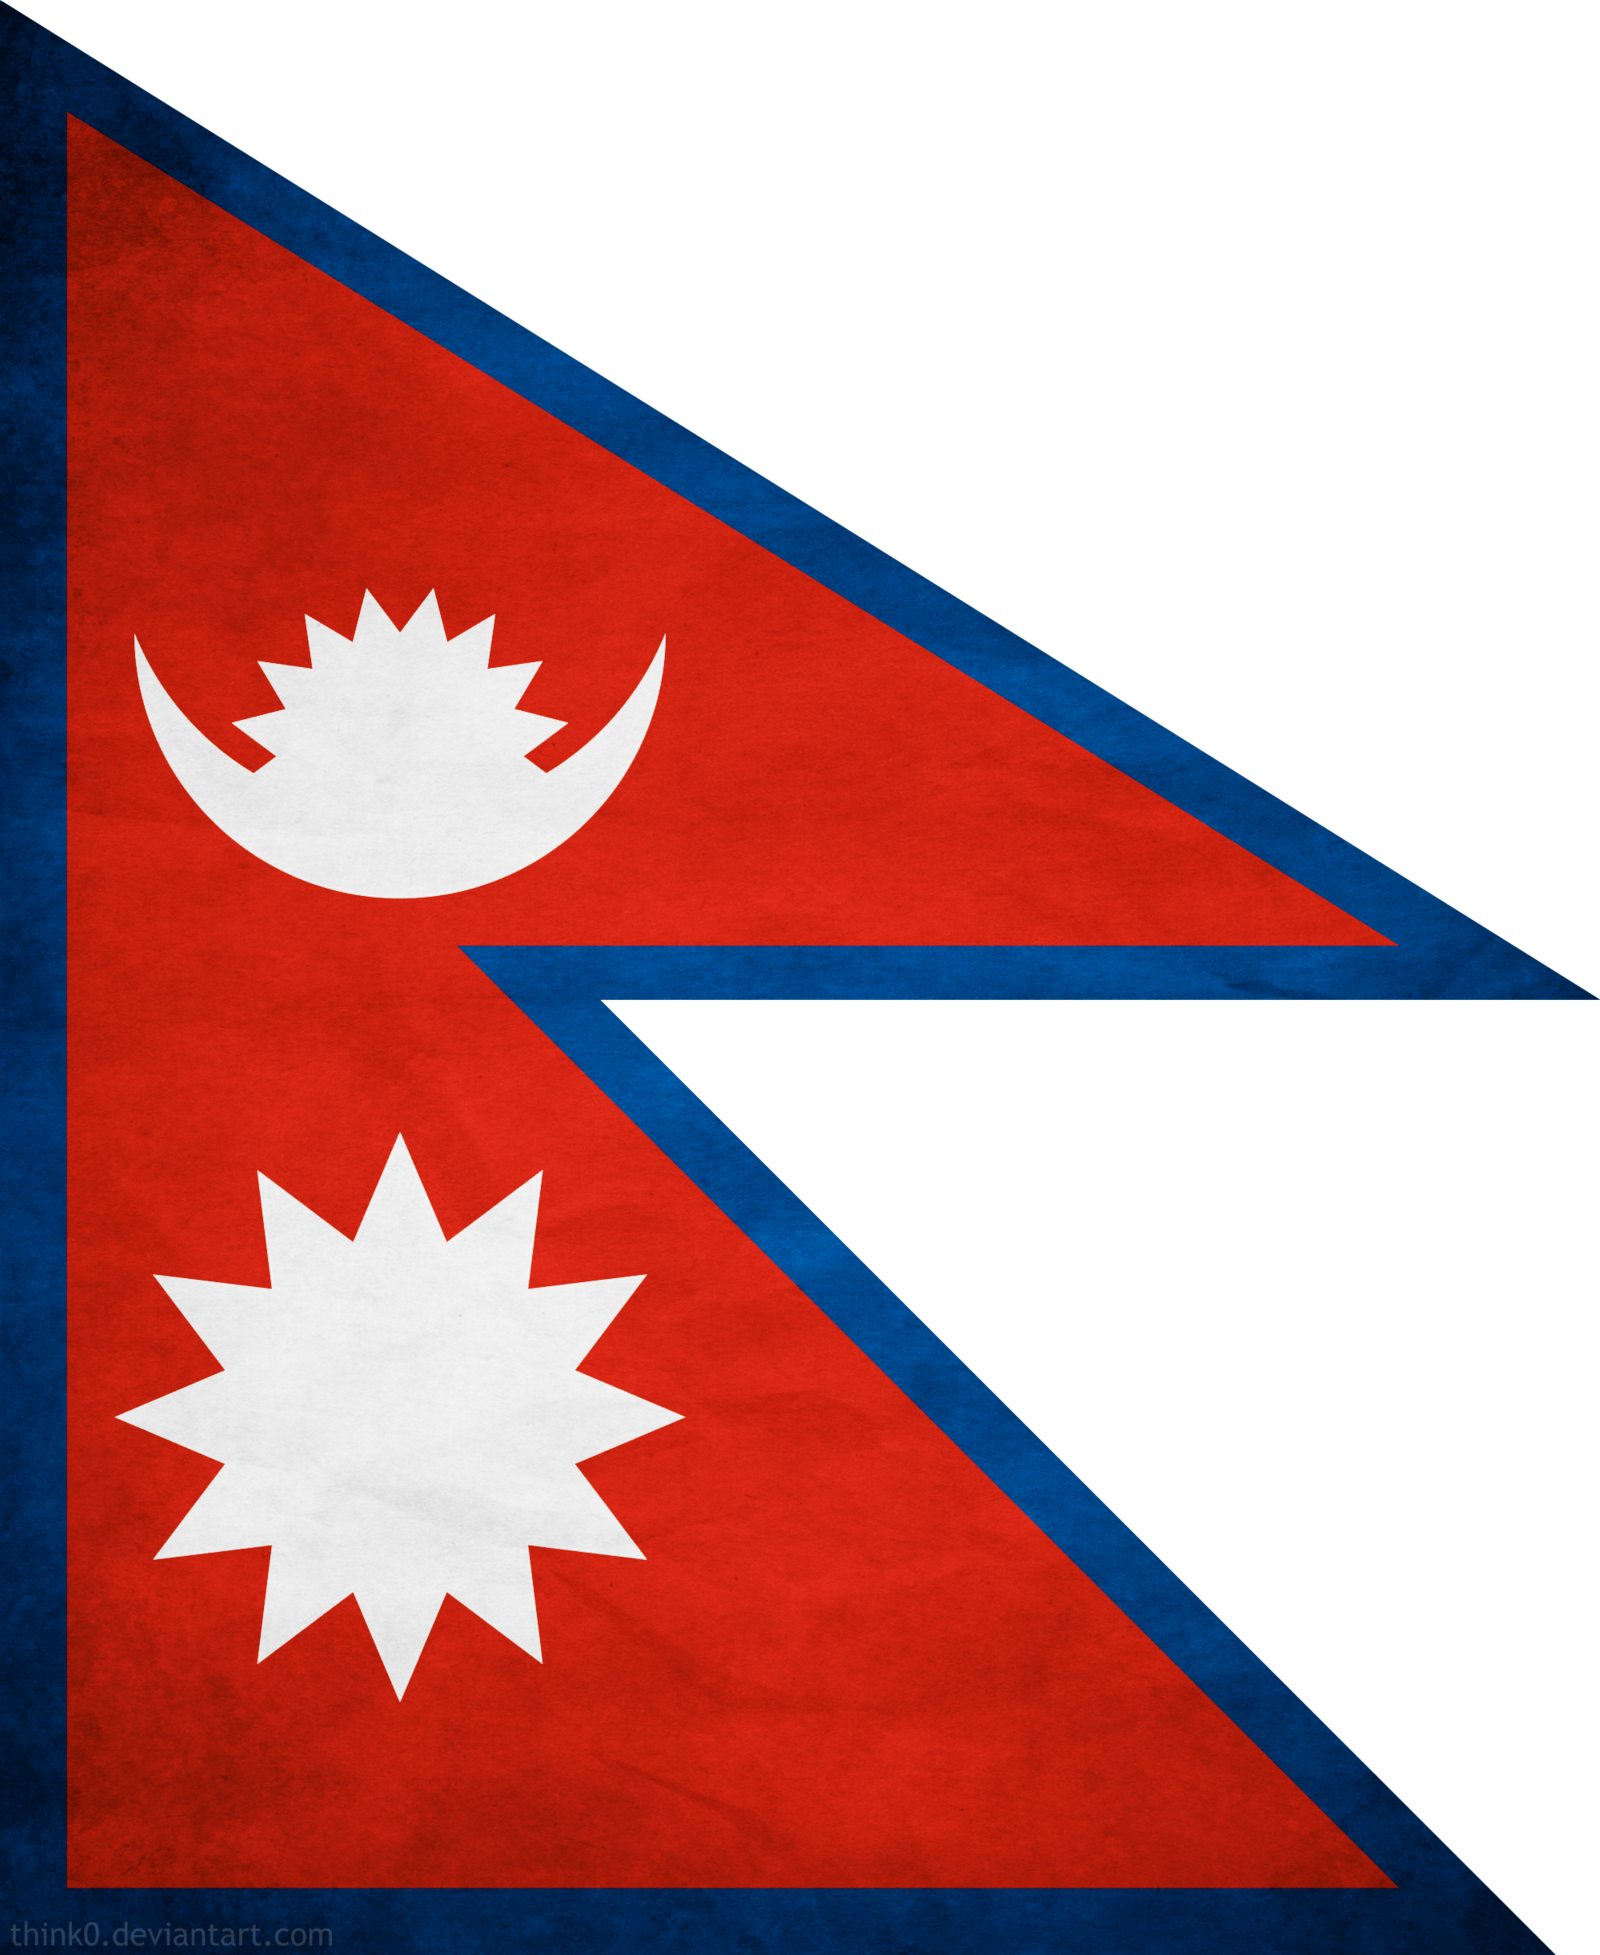 Nepal Flag Grunge by think0 on DeviantArt